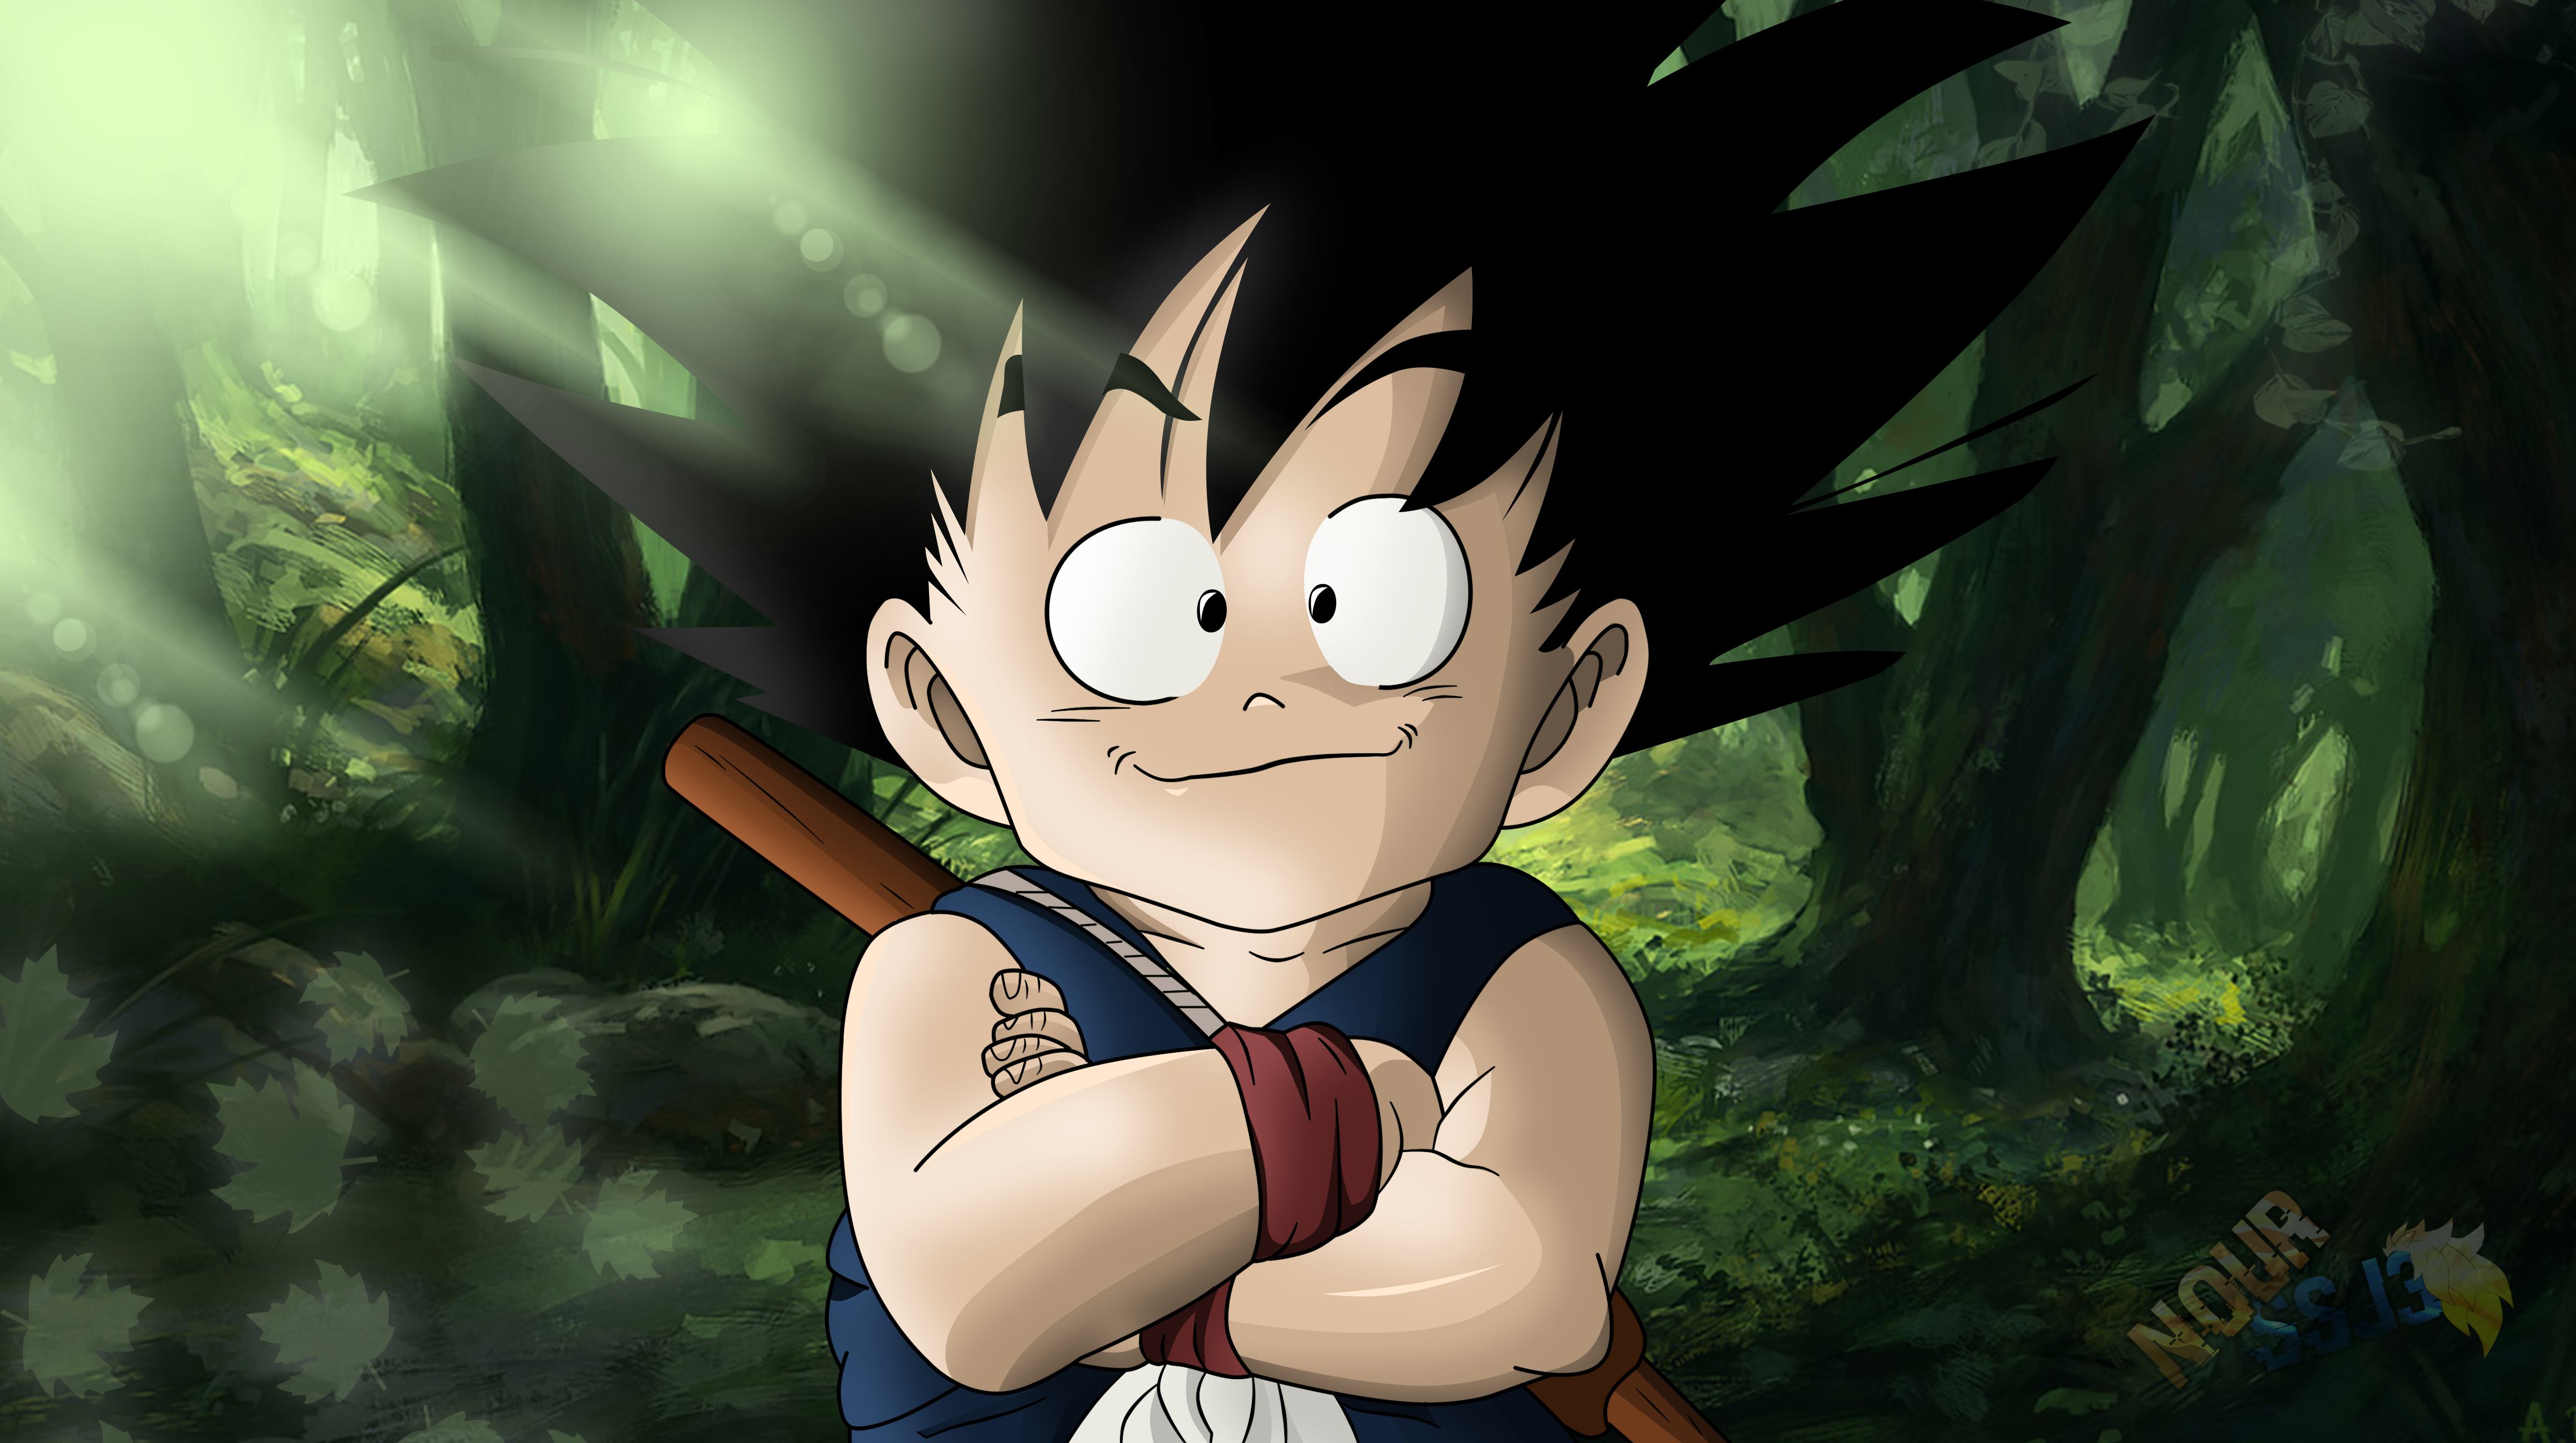 Kid Goku Jungle by nourssj3 on DeviantArt